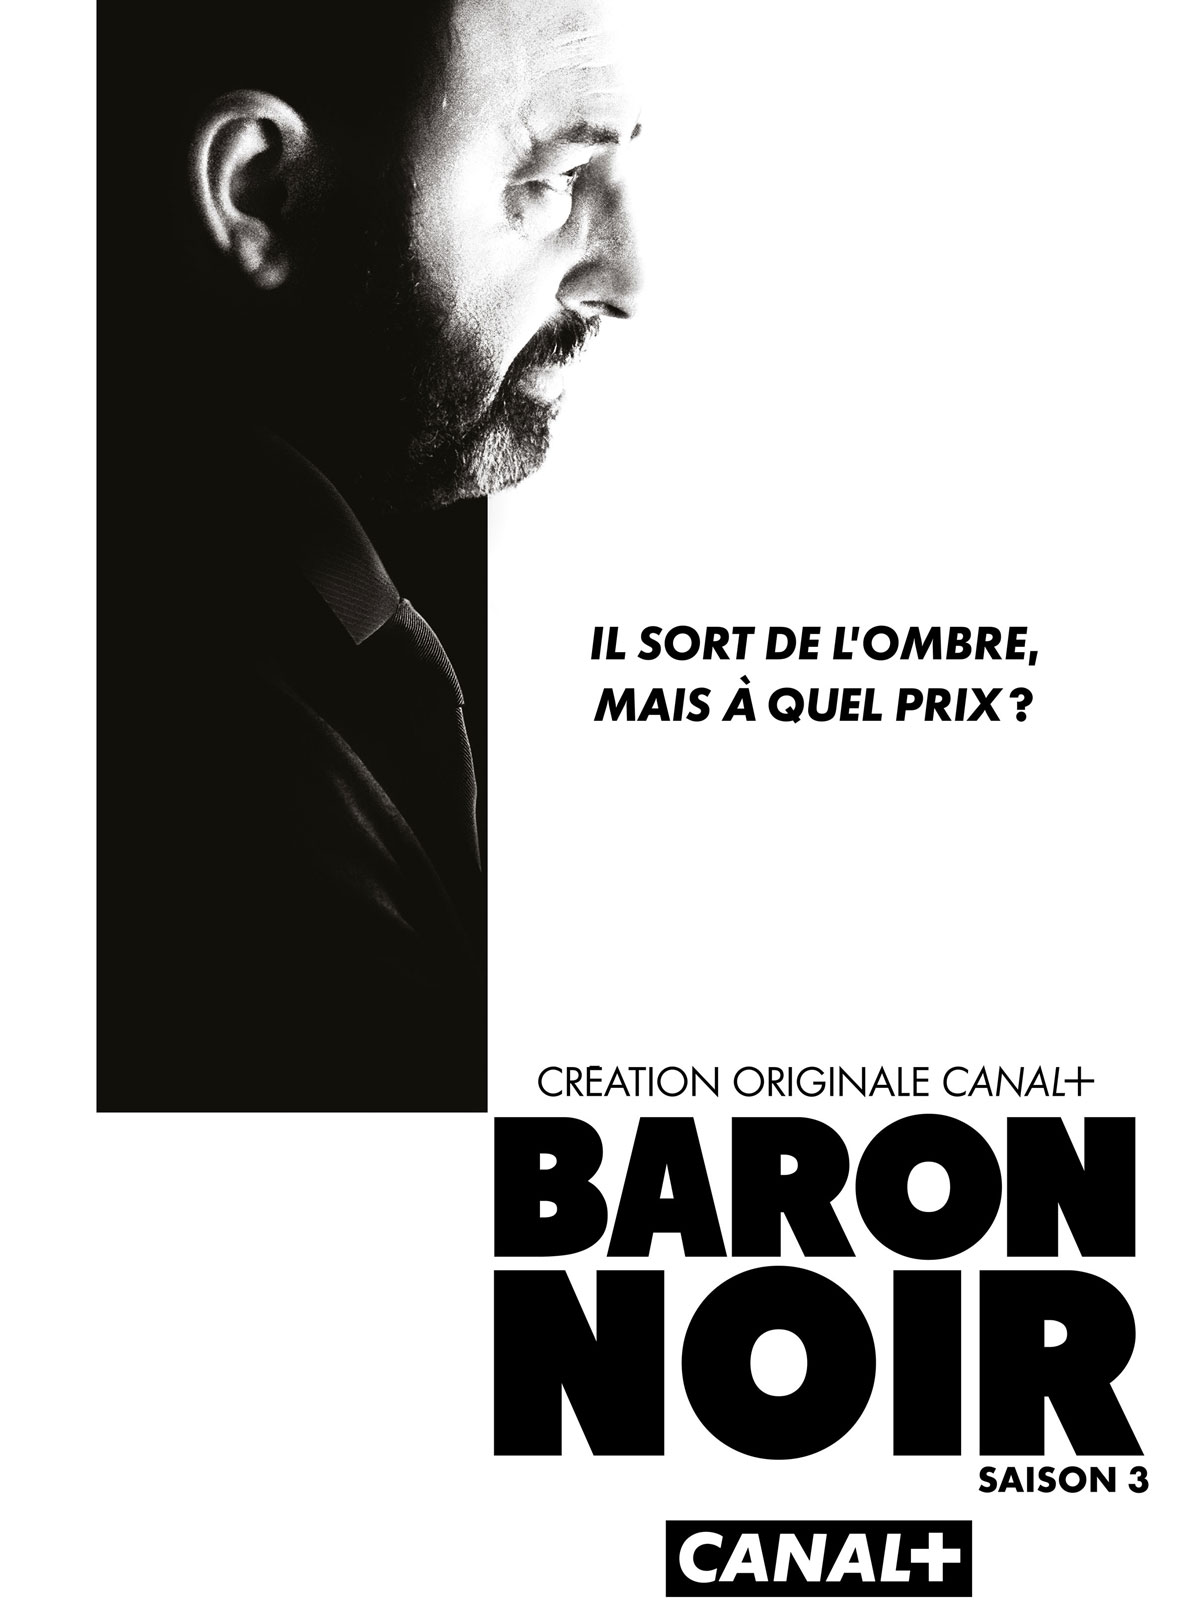 Baron noir online